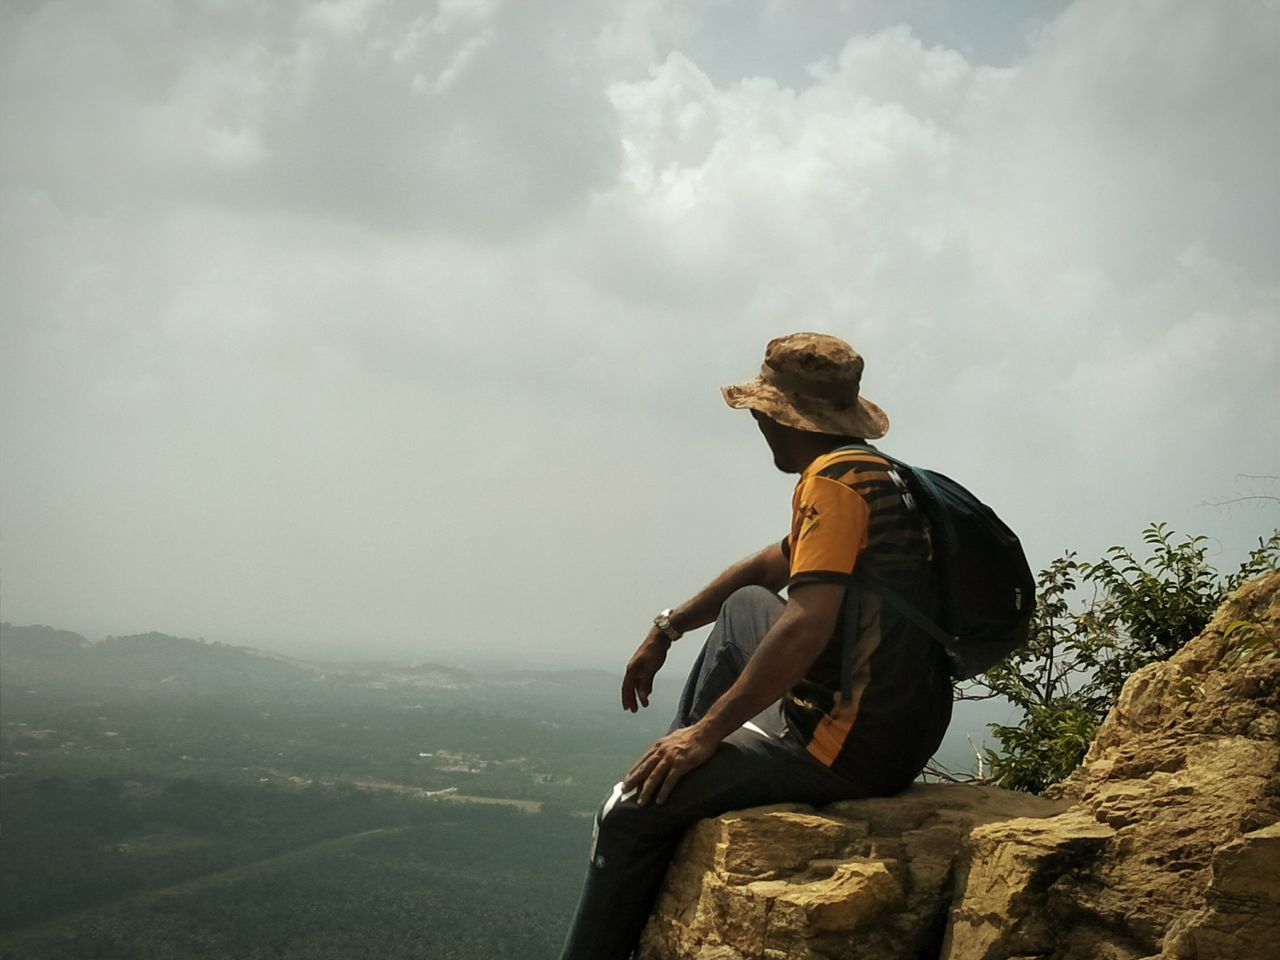 MAN SITTING ON ROCK LOOKING AT MOUNTAIN